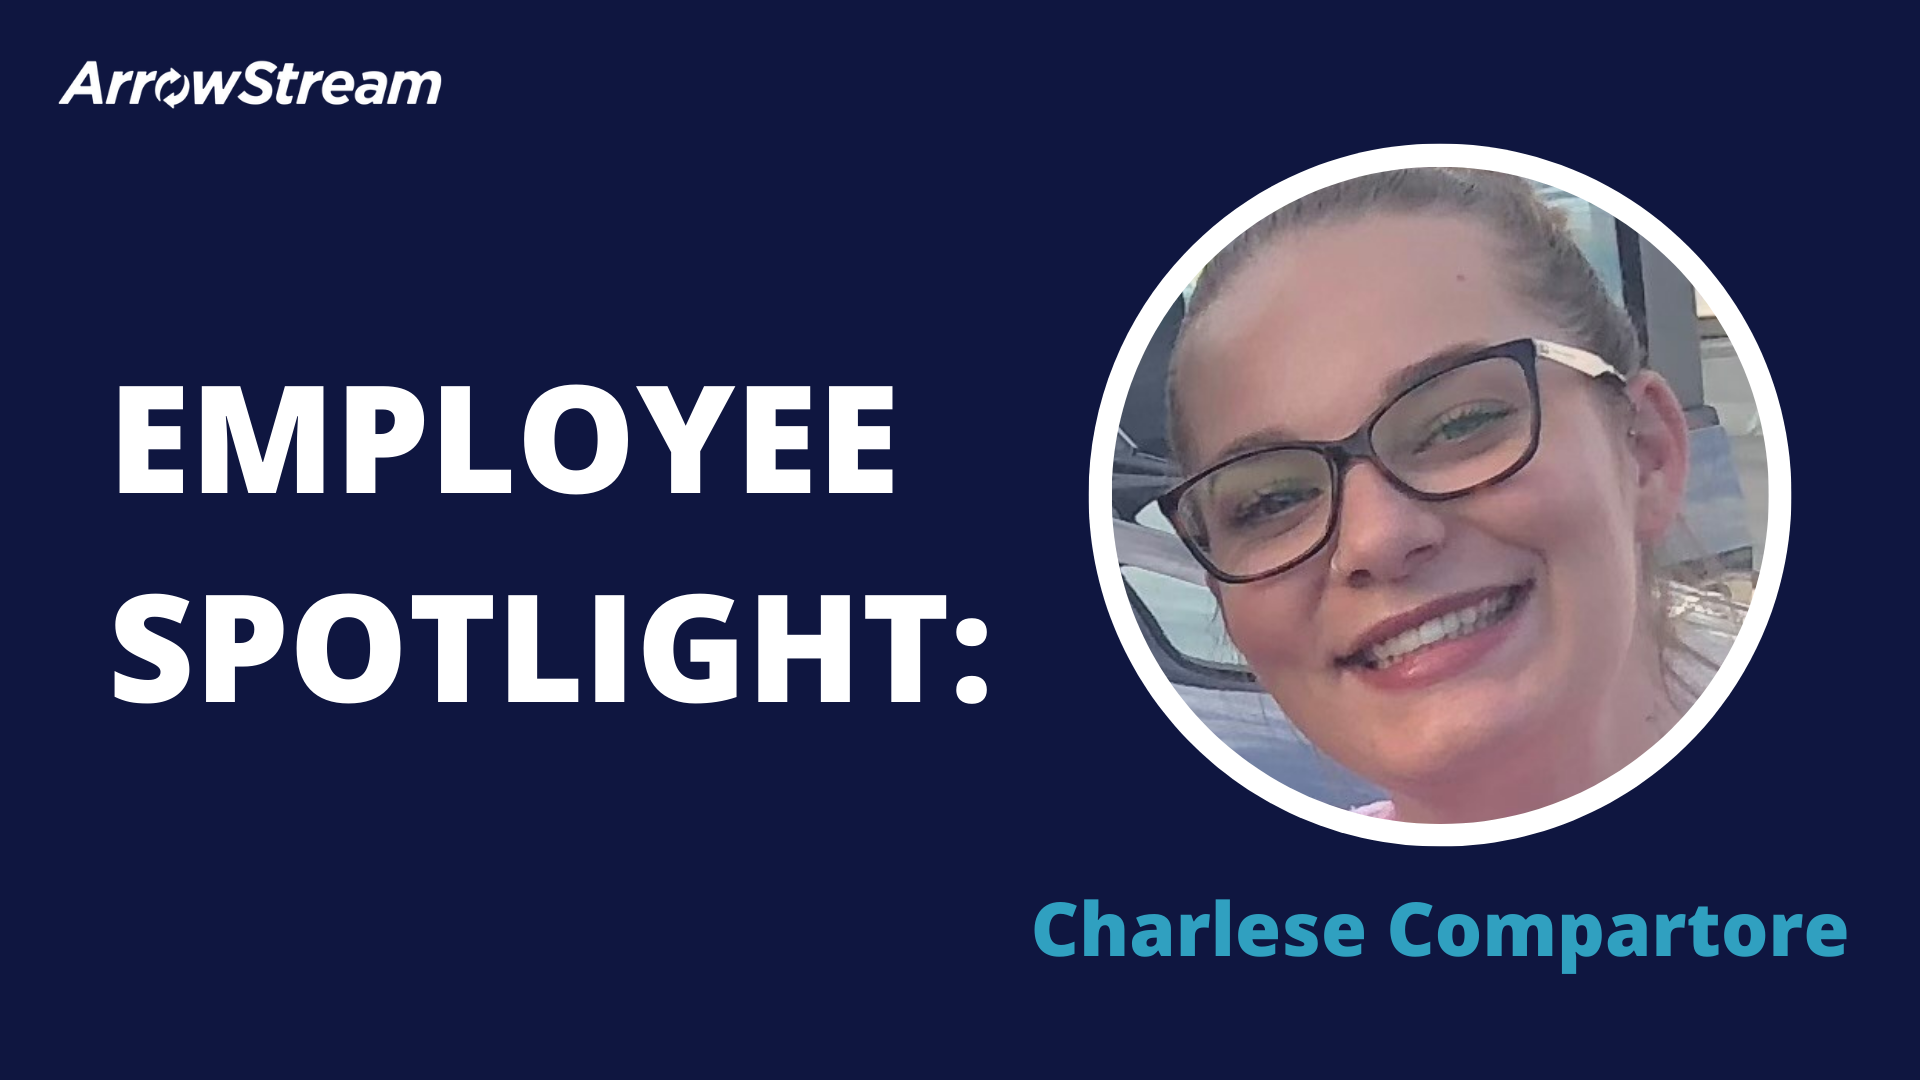 Employee Spotlight - Charlese Compartore - ArrowStream